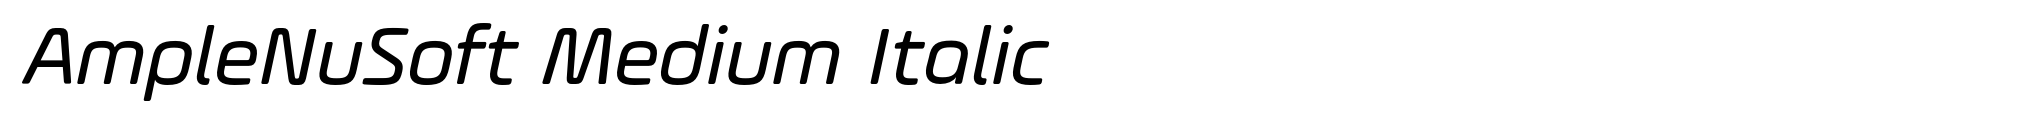 AmpleNuSoft Medium Italic image